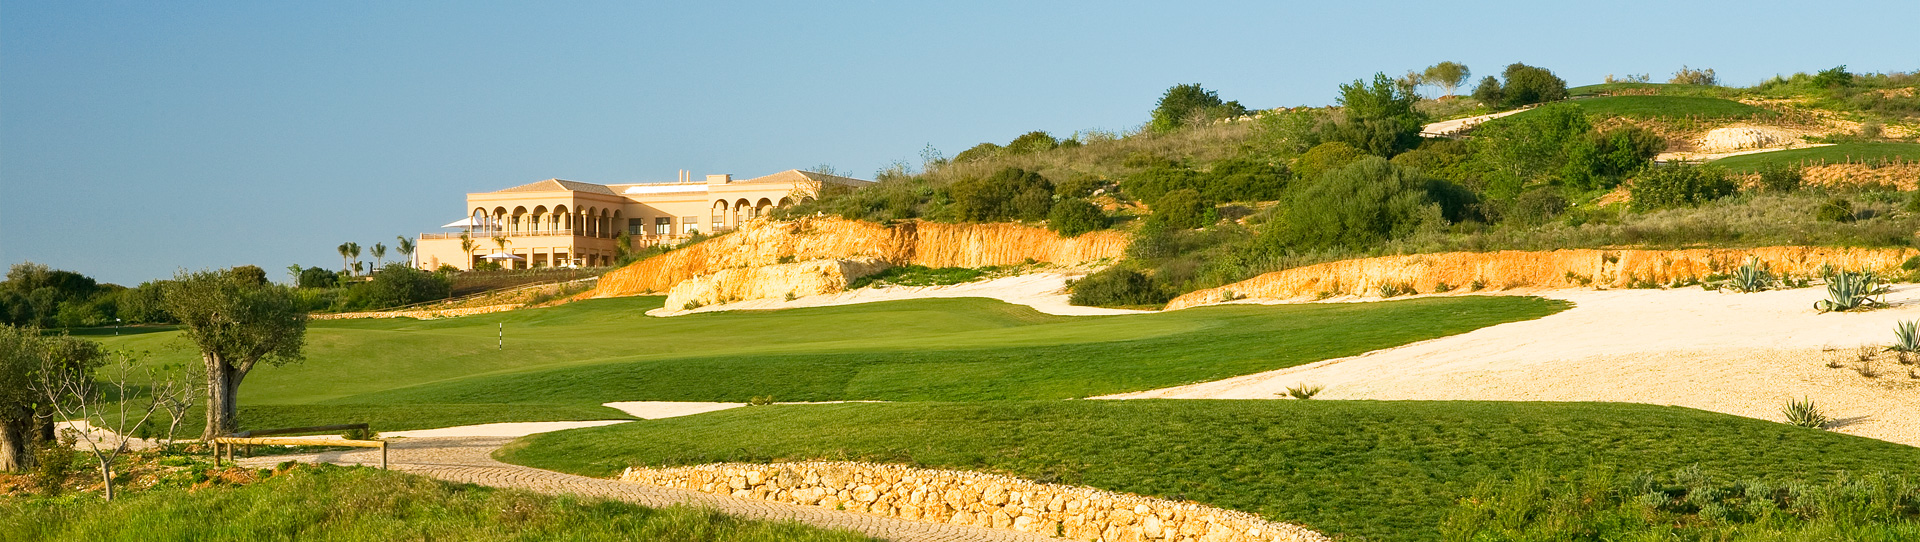 Portugal golf holidays - Amendoeira Tri Experience - Photo 1